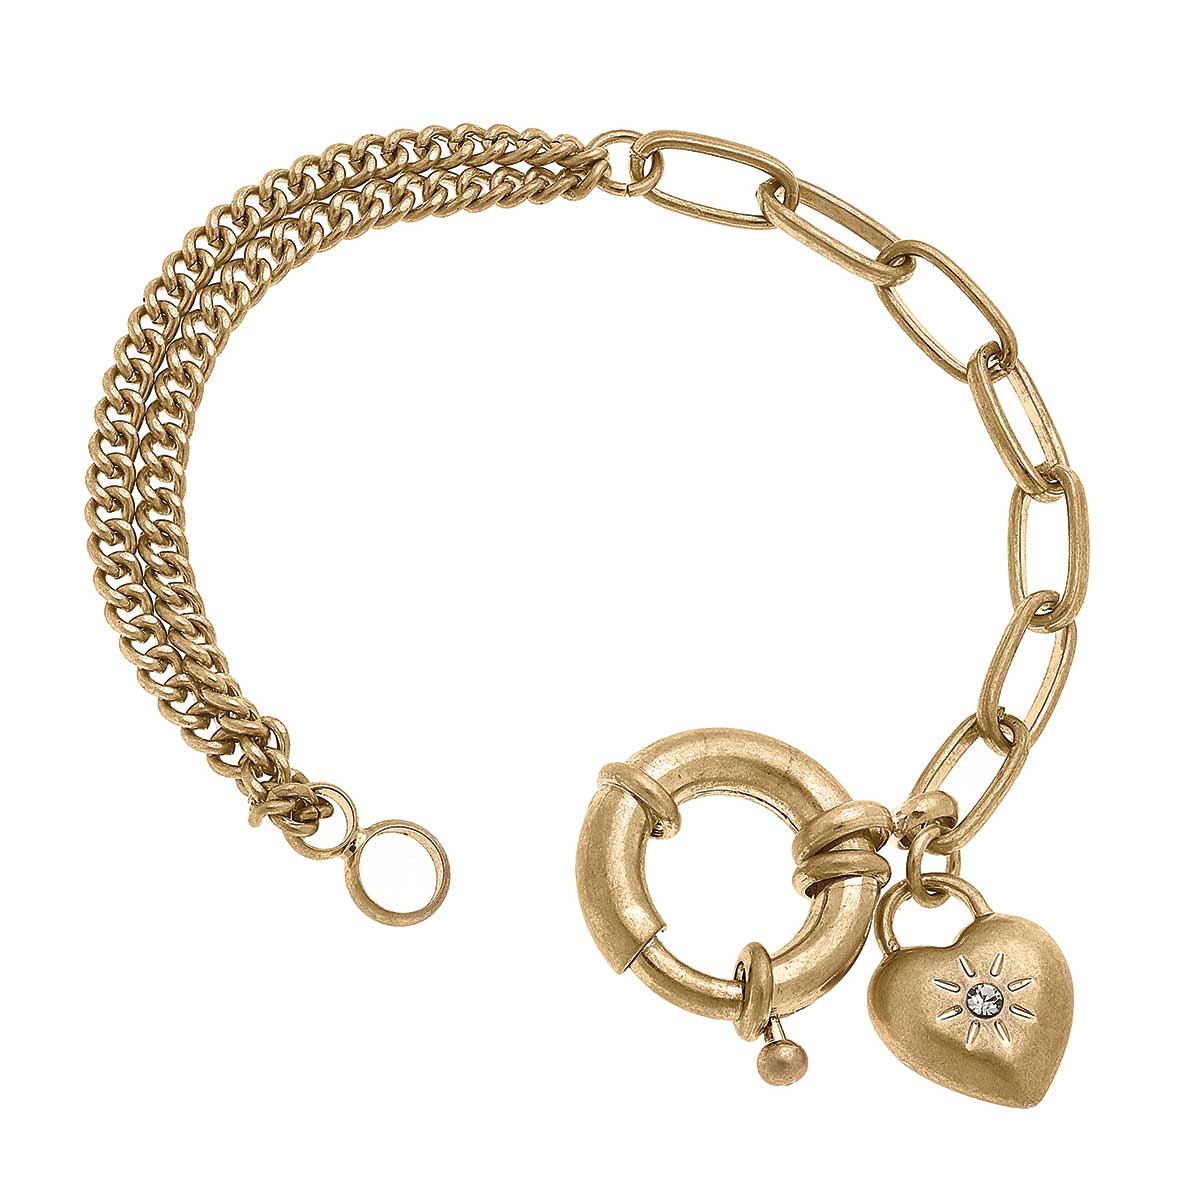 Bracelets- Canvas Kacie Puffed Heart Mixed Media Chain Bracelet in Worn Gold